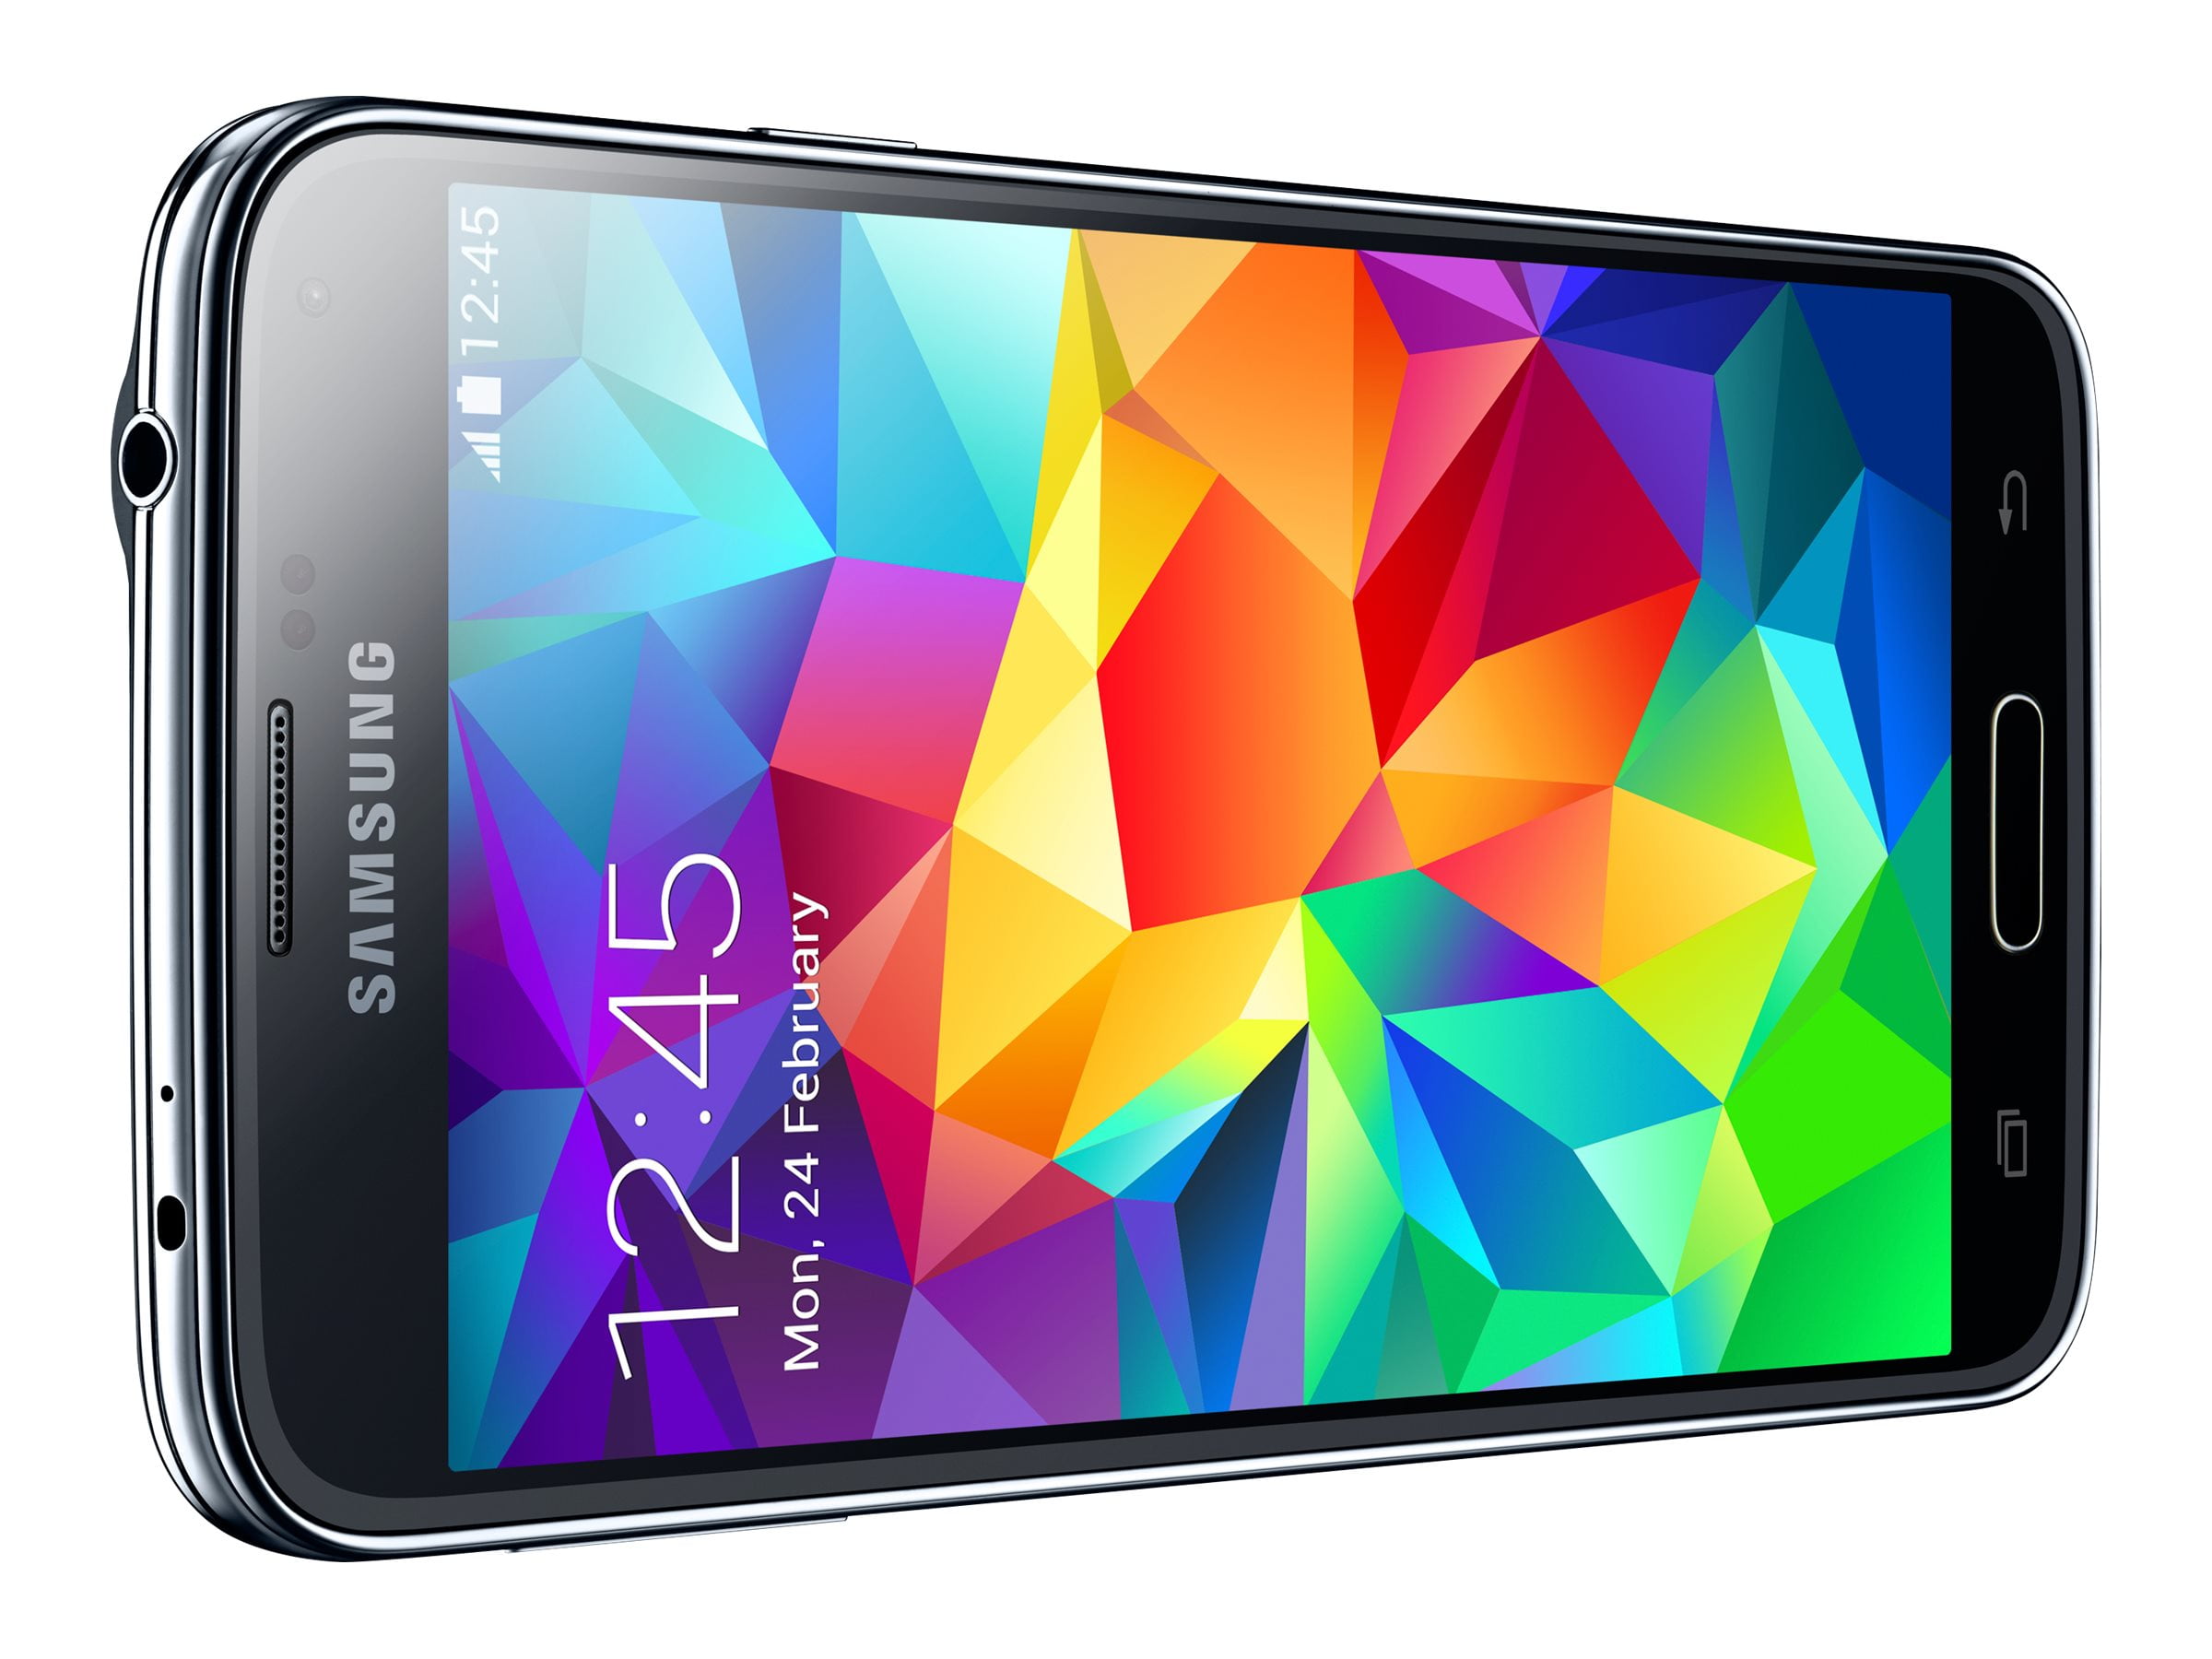 Samsung galaxy sm mini. Samsung Galaxy s5 Duos SM-g900fd. Samsung s5 SM g900. Galaxy s5 SM-g900. Смартфон Samsung Galaxy s5 SM-g900f 16gb.